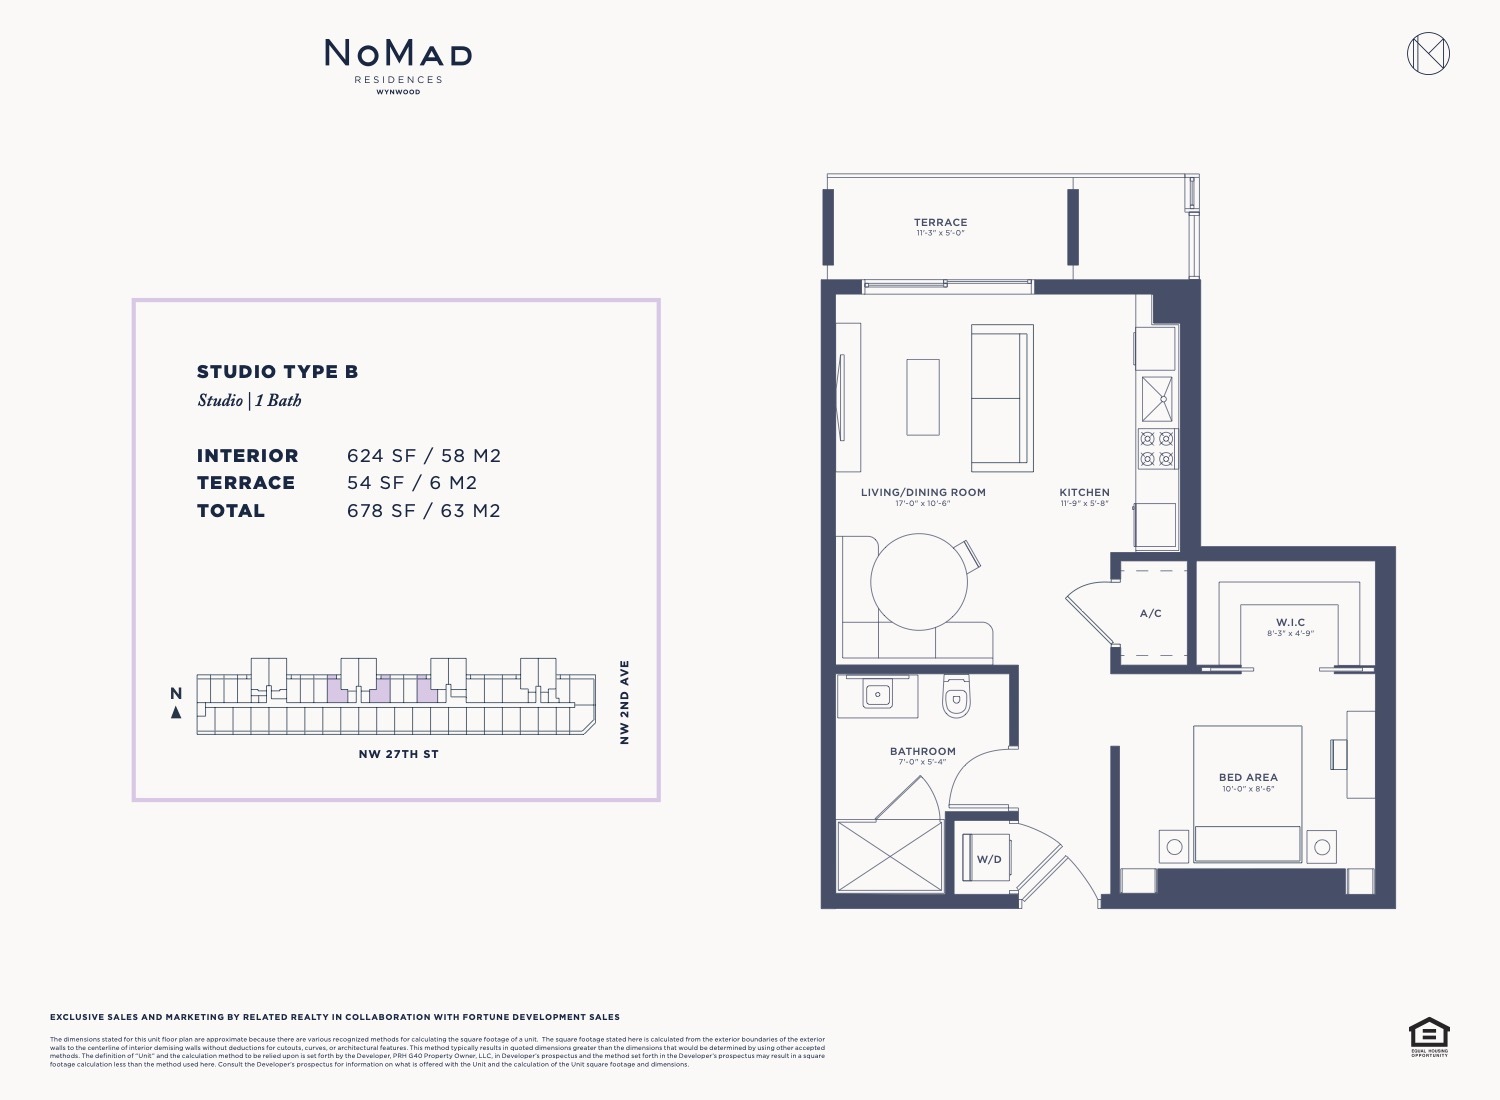 Floor Plan for Nomad Wynwood Floorplans, Studio Type B